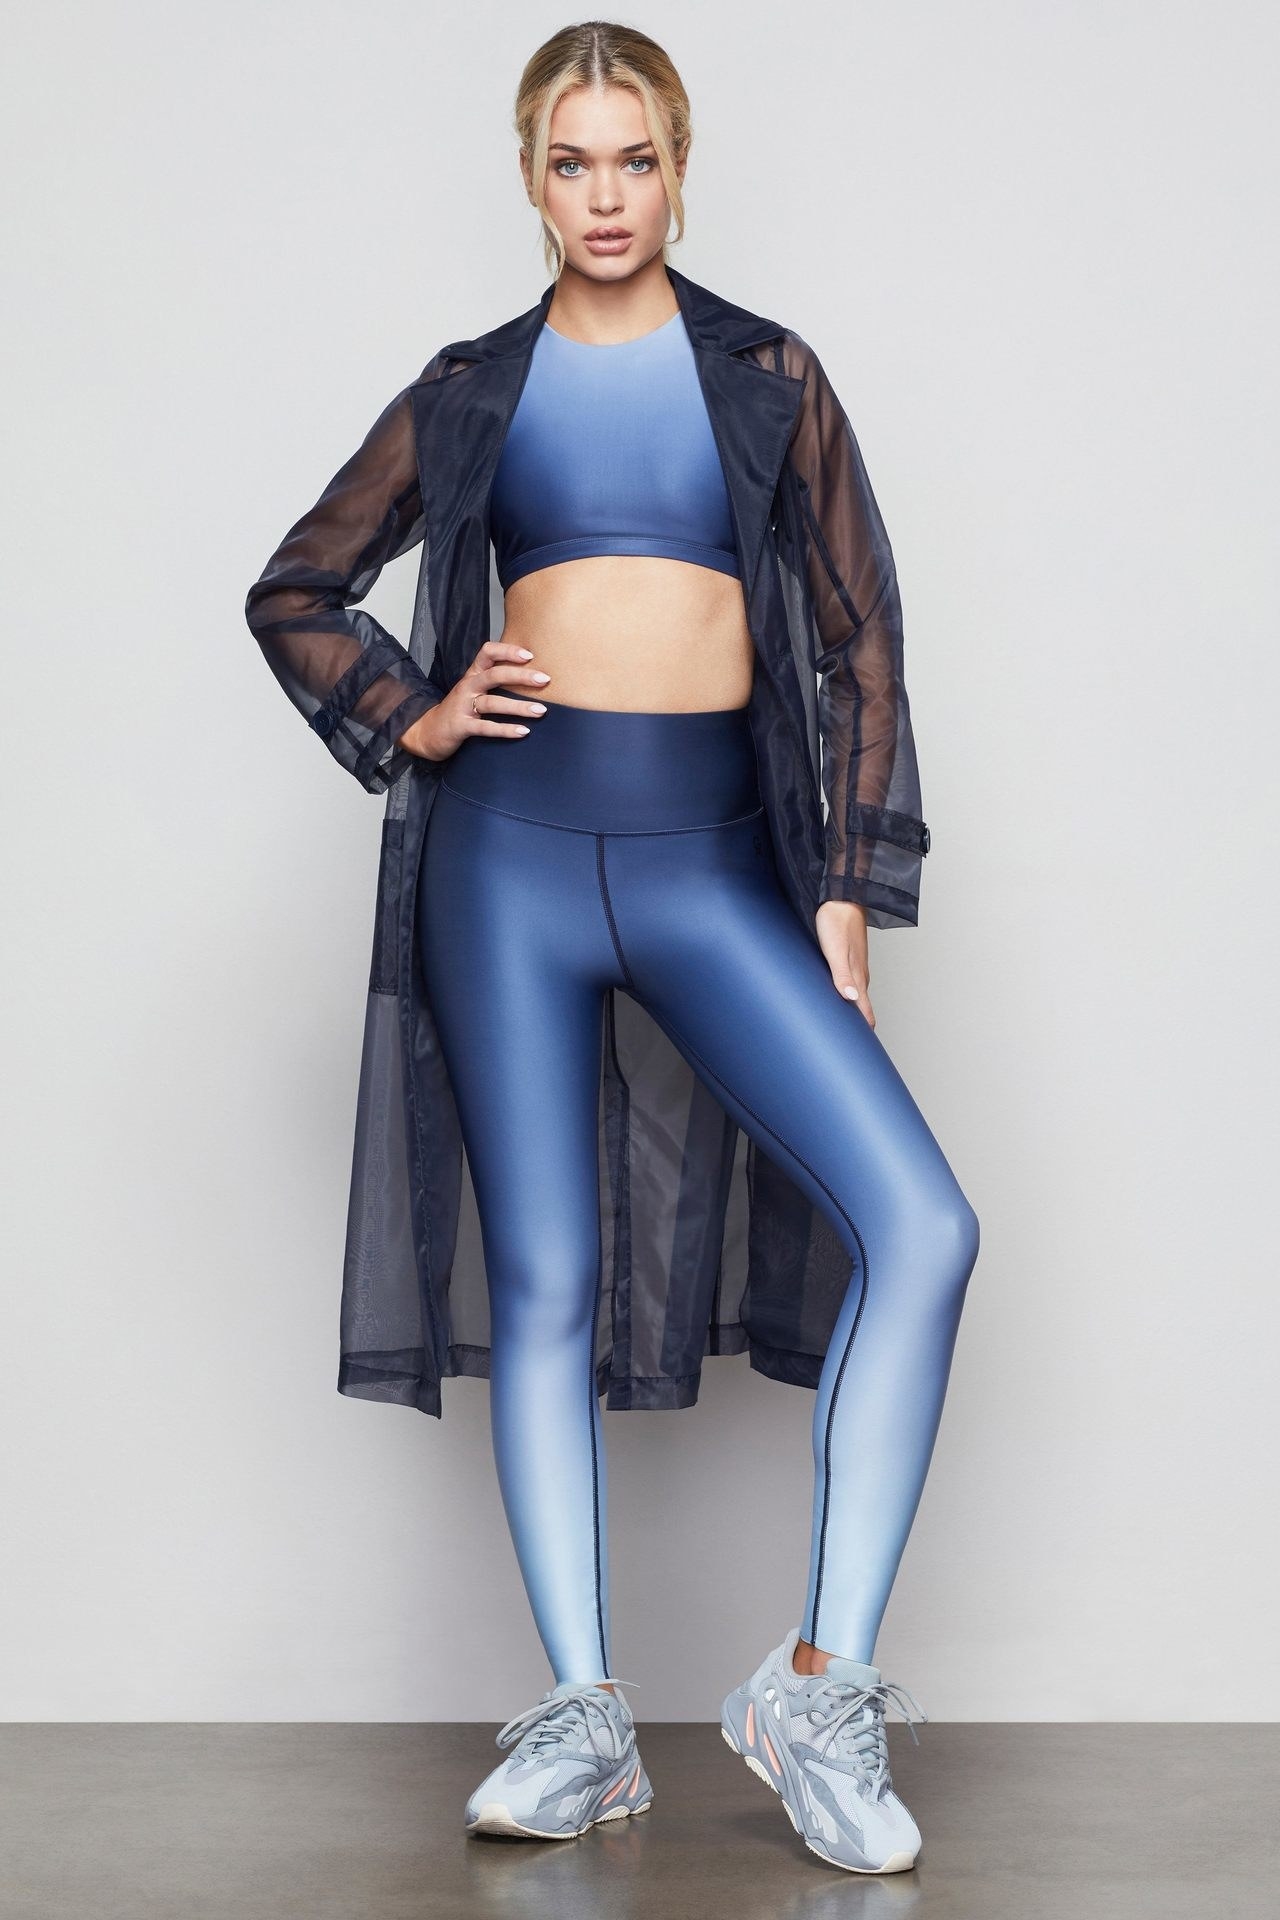 Model wearing the gradient leggings in blue 